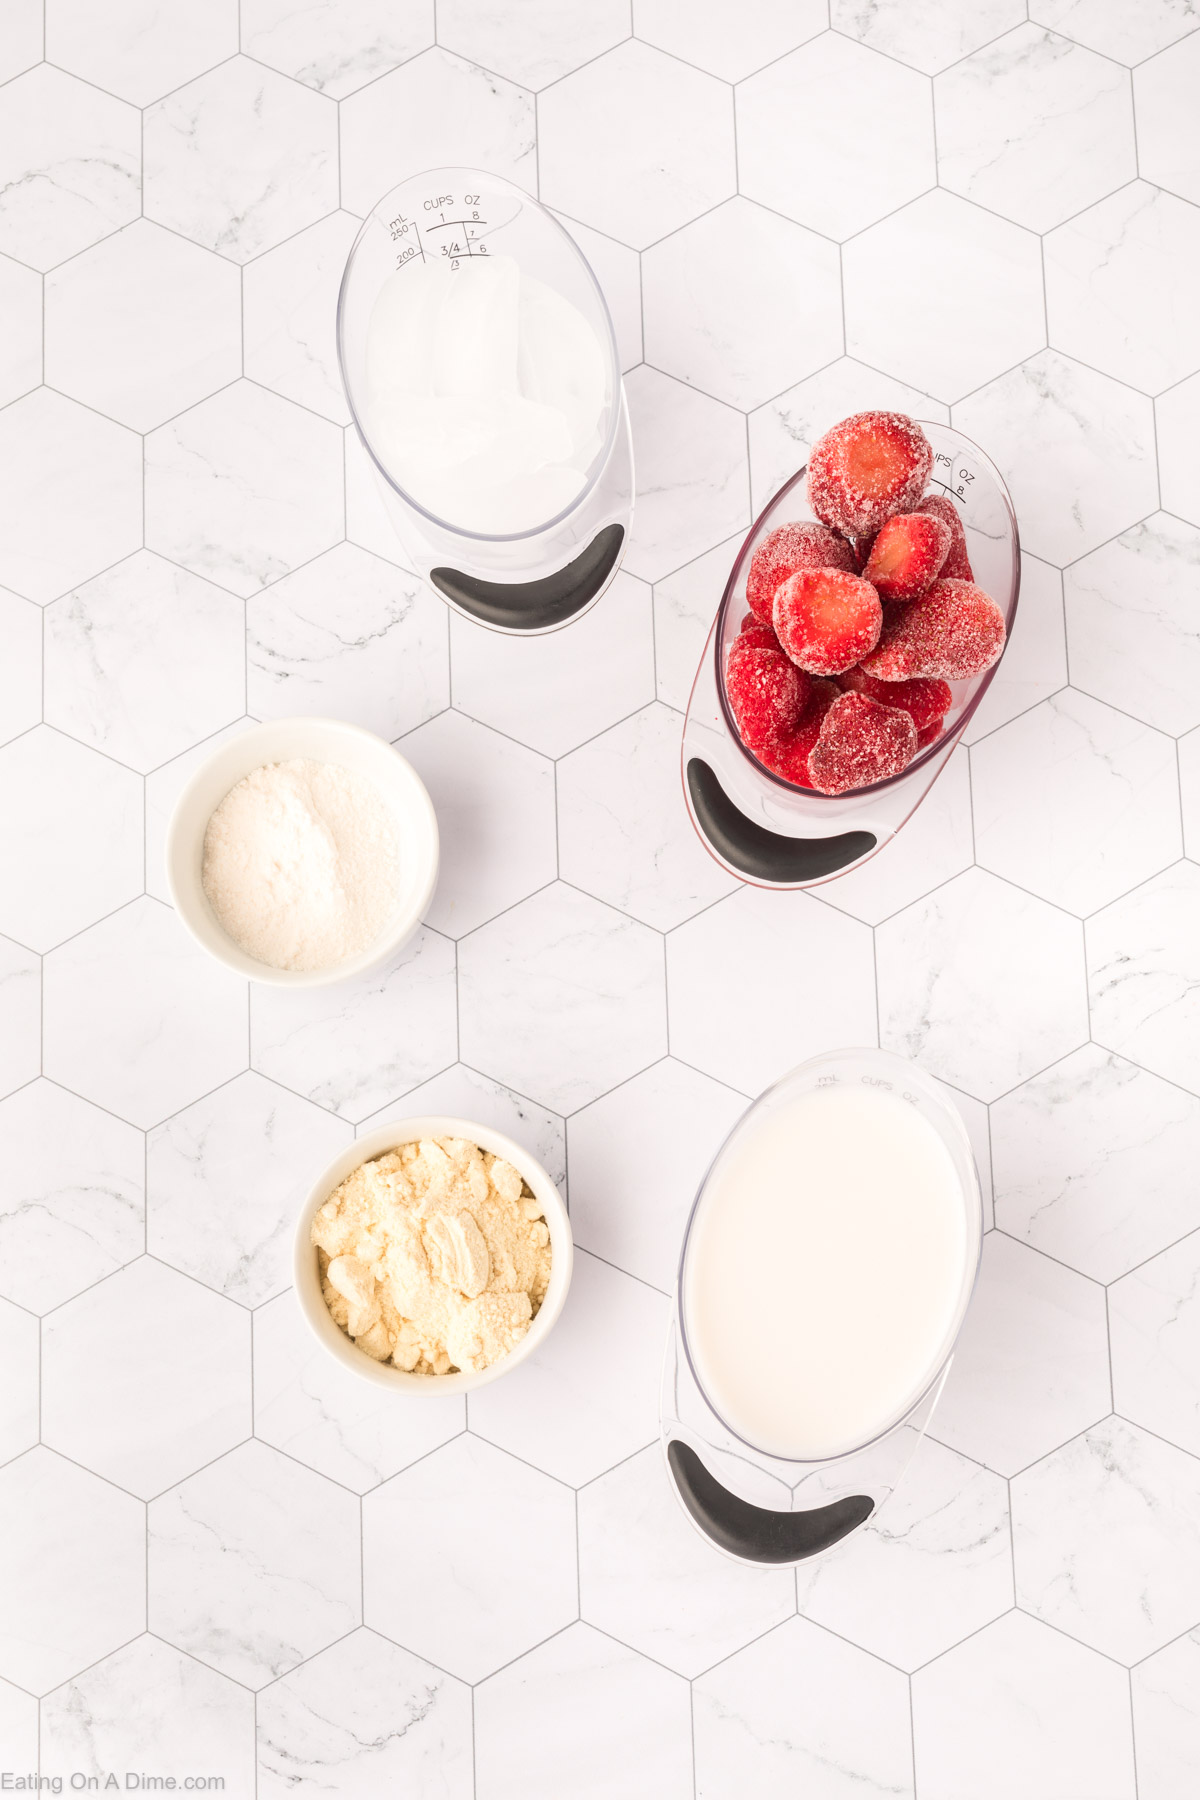 Strawberry Protein Shake Ingredients - almond milk, protein powder, strawberries, Jell-O Cheesecake Mix, Ice